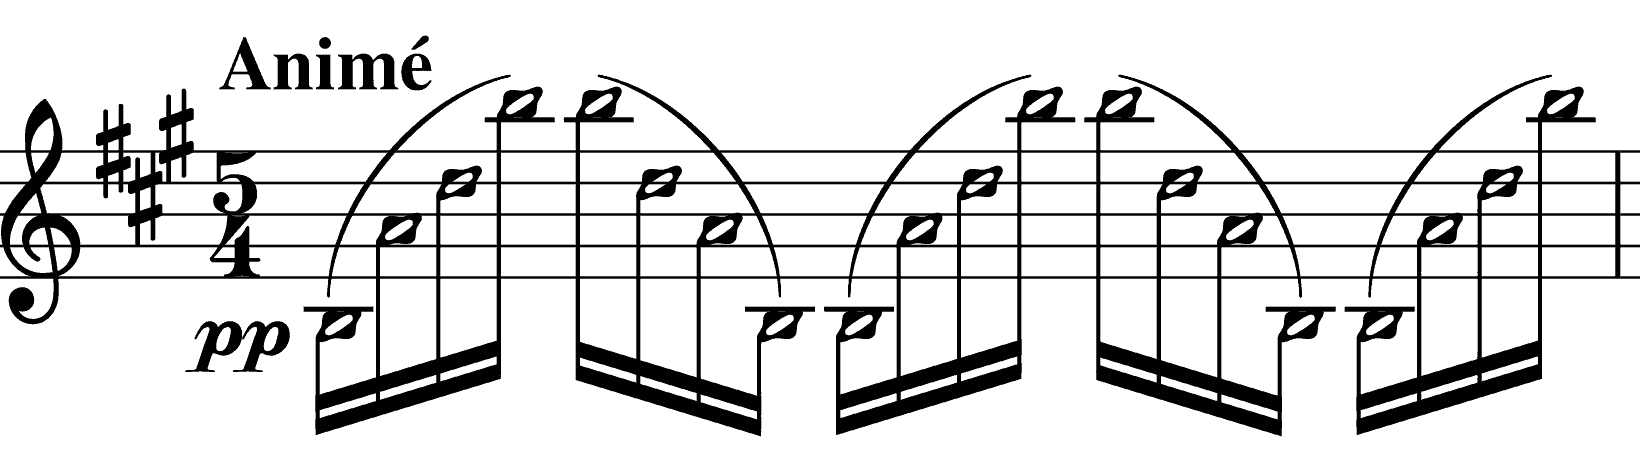 arpeggio consisting entirely of harmonics